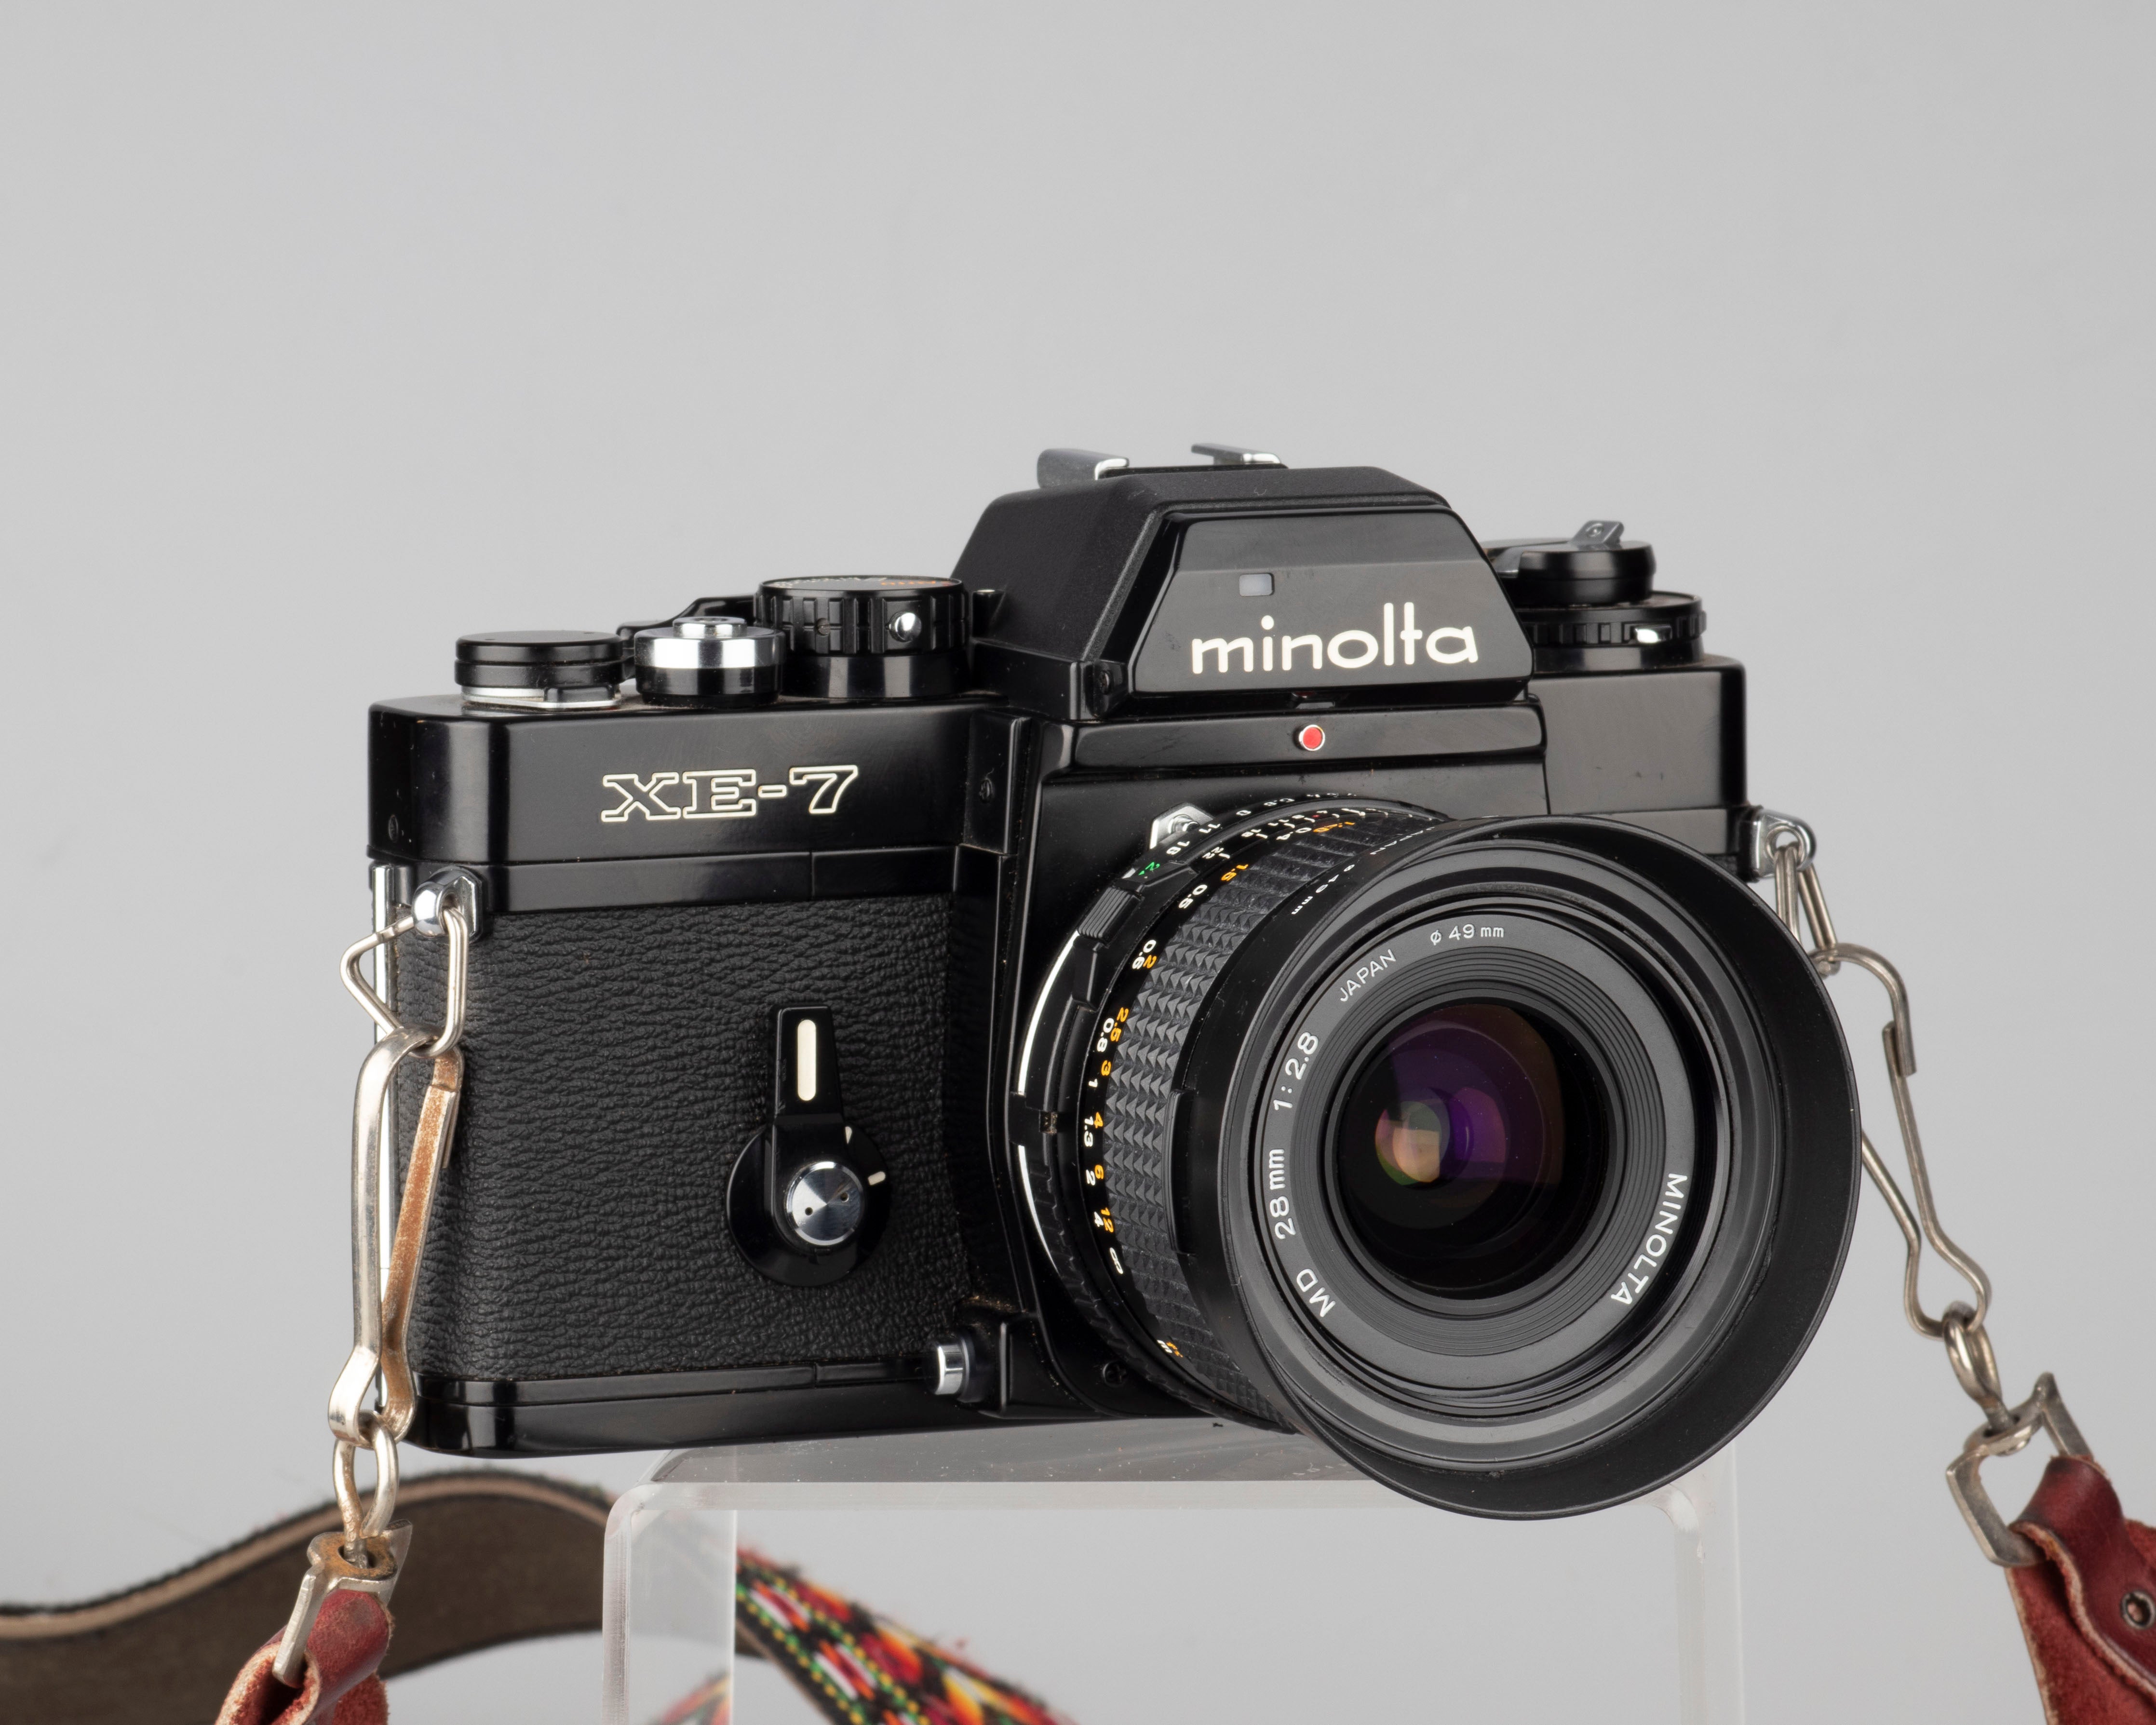 Minolta XE-7 35mm SLR (serial 1199607) w/ Minolta MD 28mm f2.8 lens